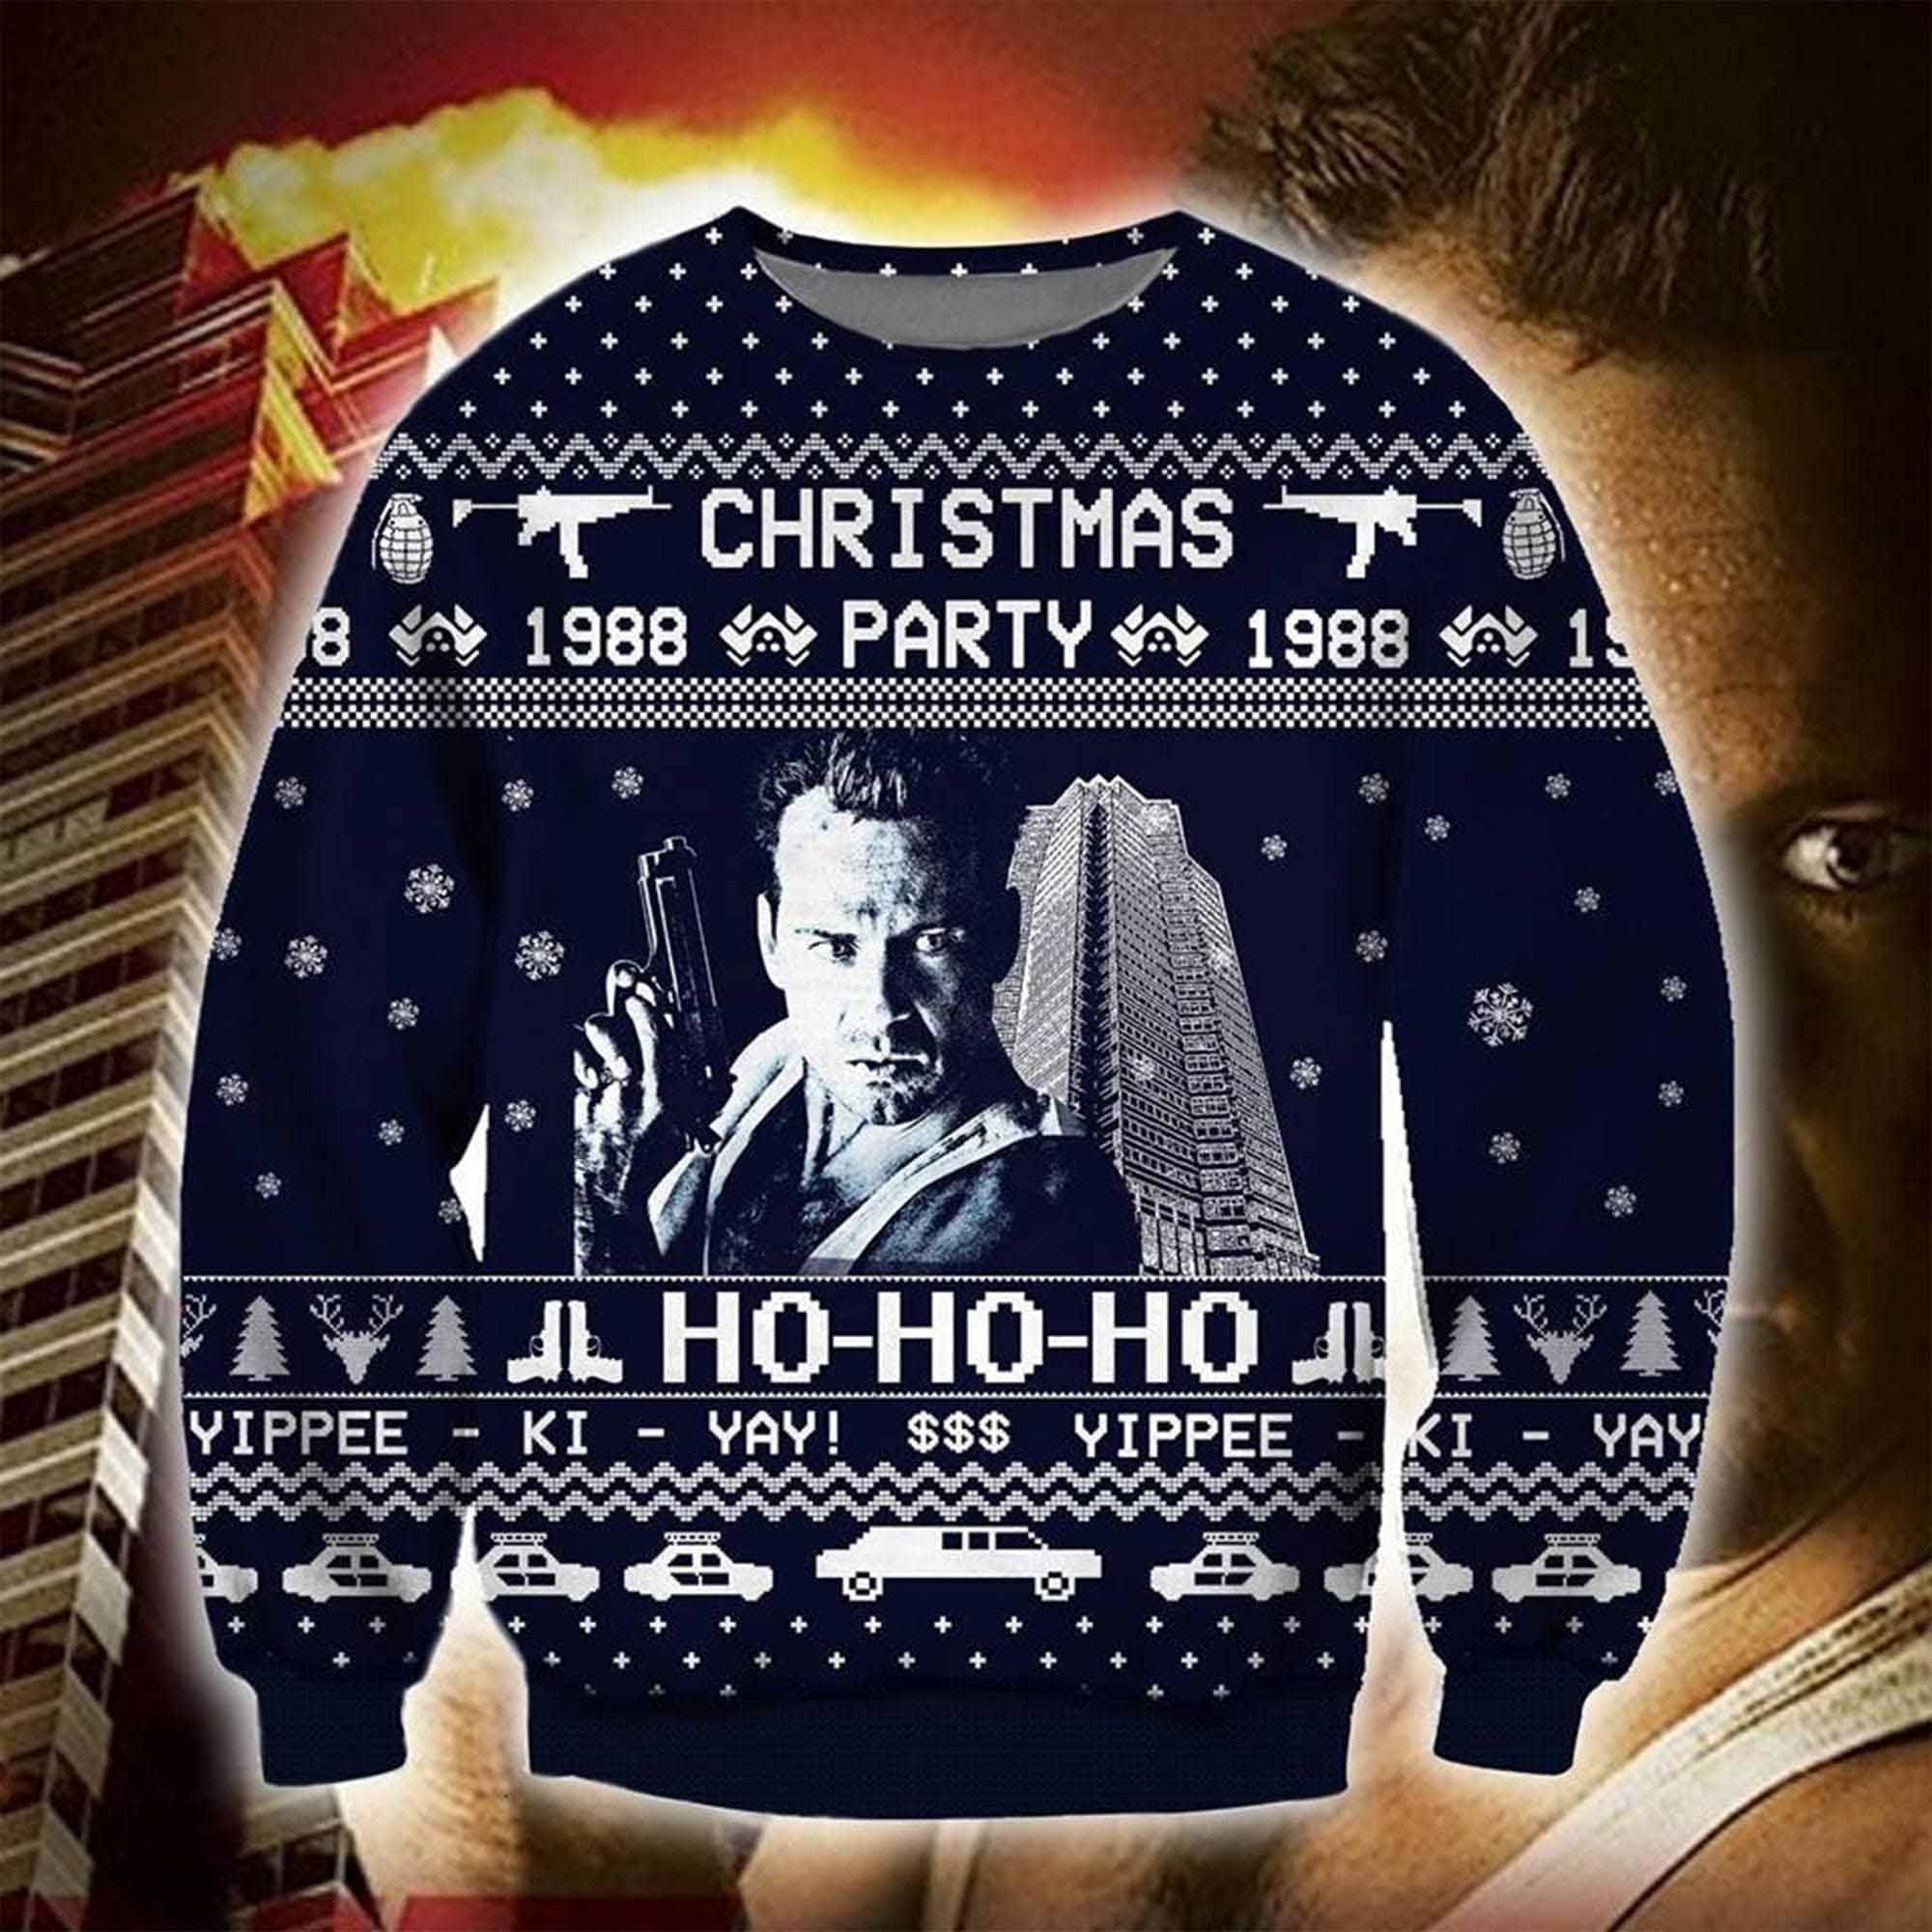 Die Hard Party 1988 Ho Ho Ho Ugly Christmas Sweater